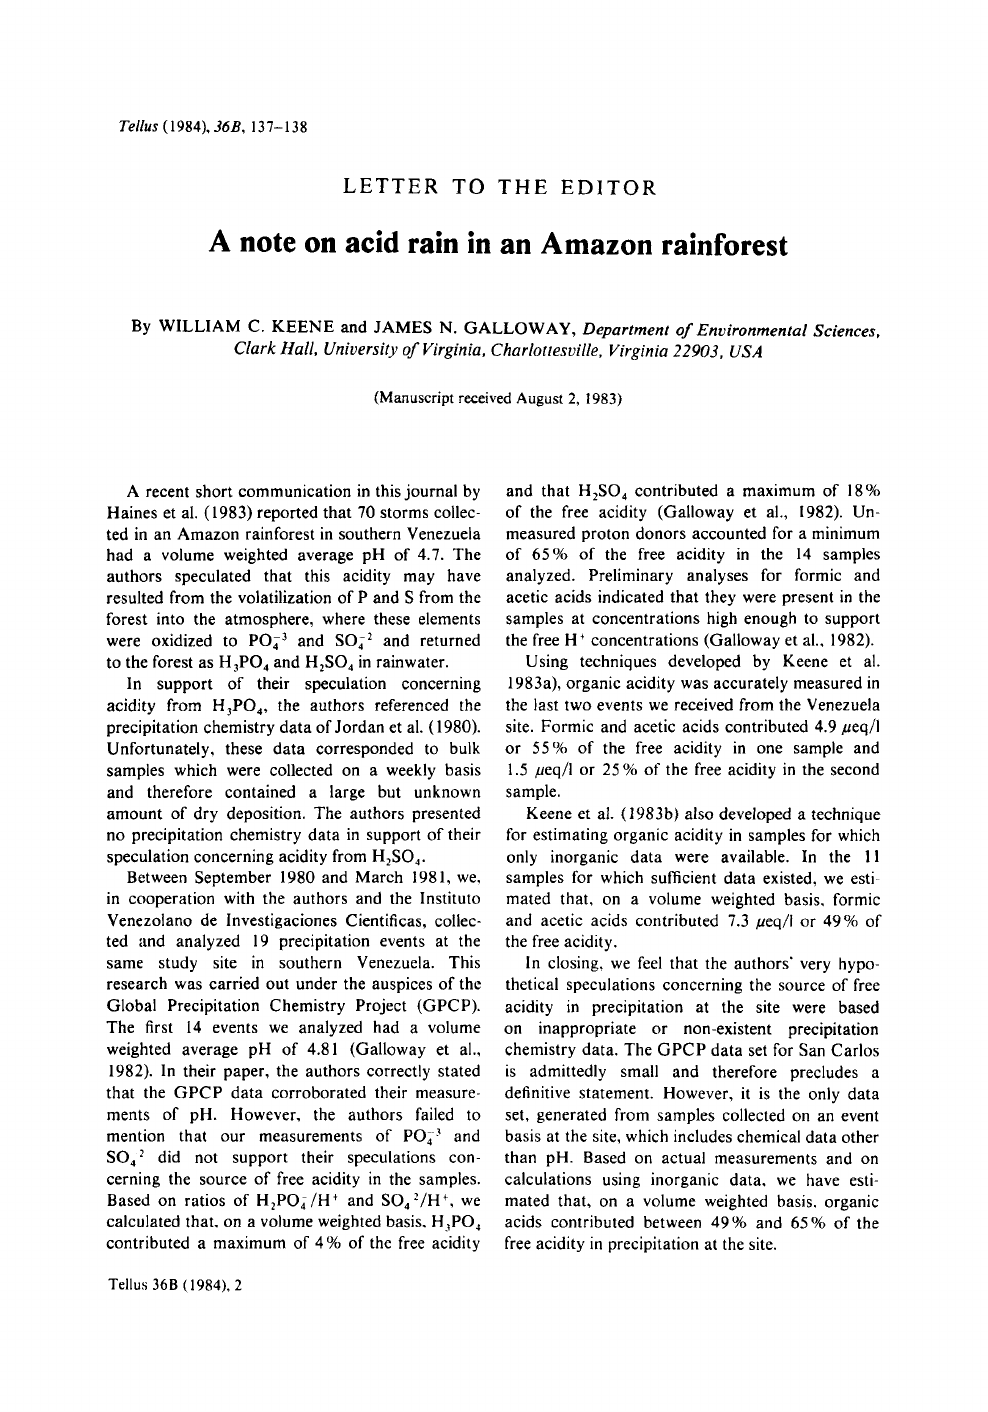 acid rain research paper